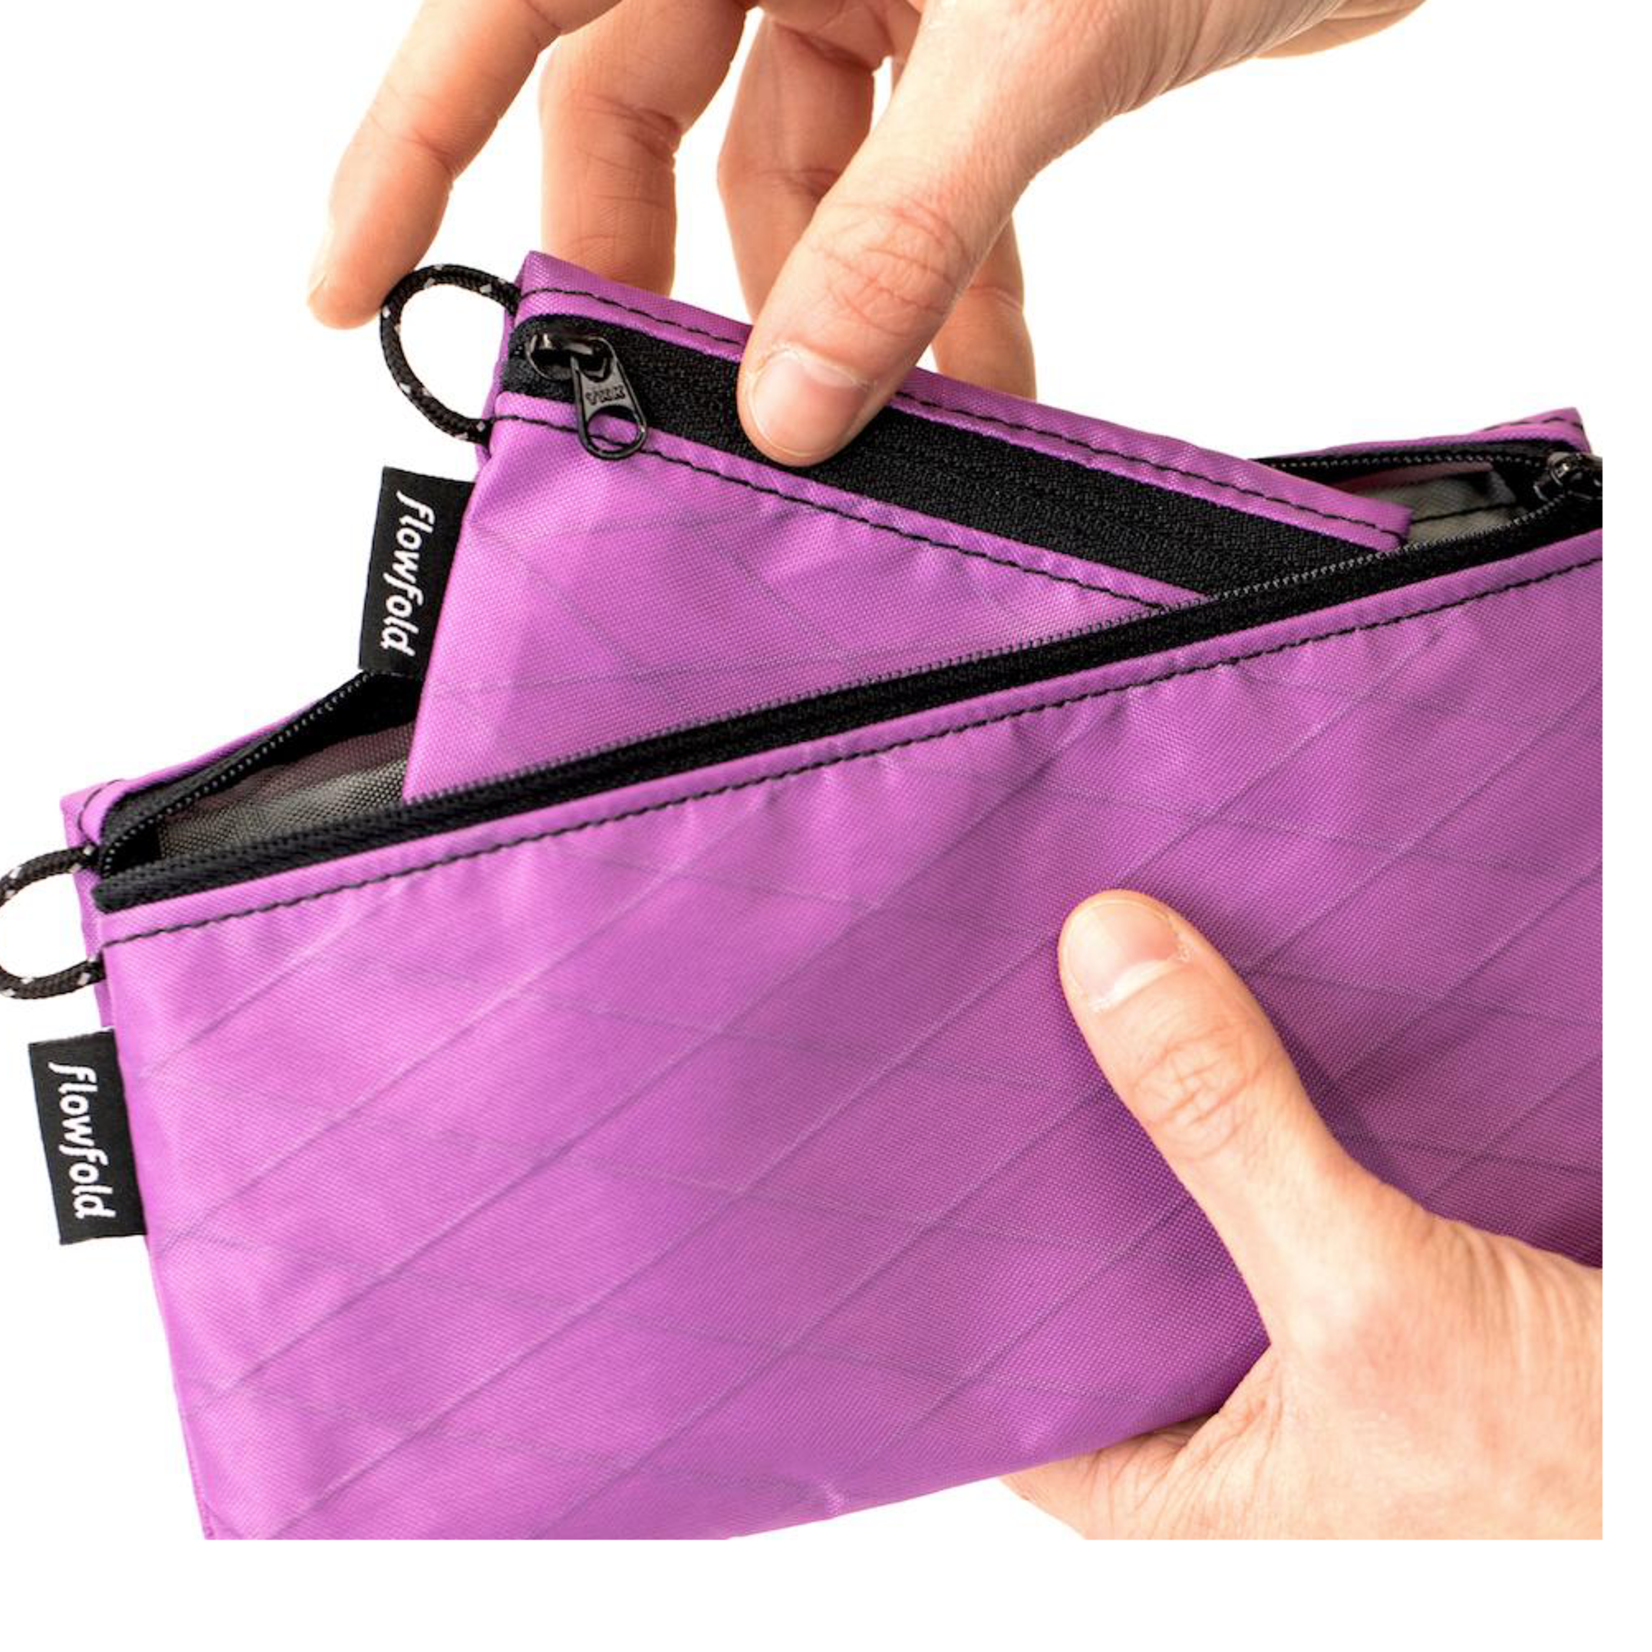 Flowfold wallet & phone holder